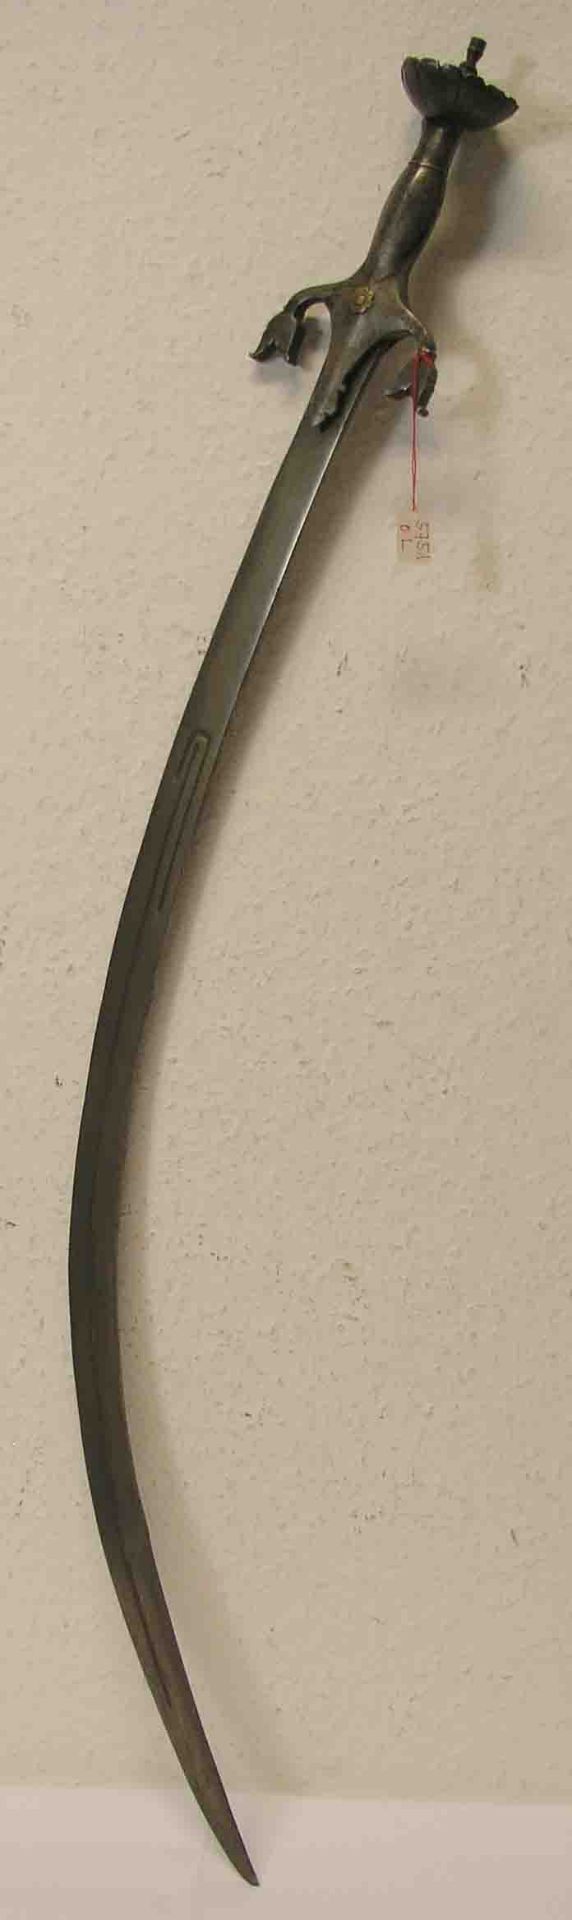 Säbel, Pulouar, Afghanistan. Gekrümmte Klinge, eisernes Gefäß mit stark zur Klinge hin